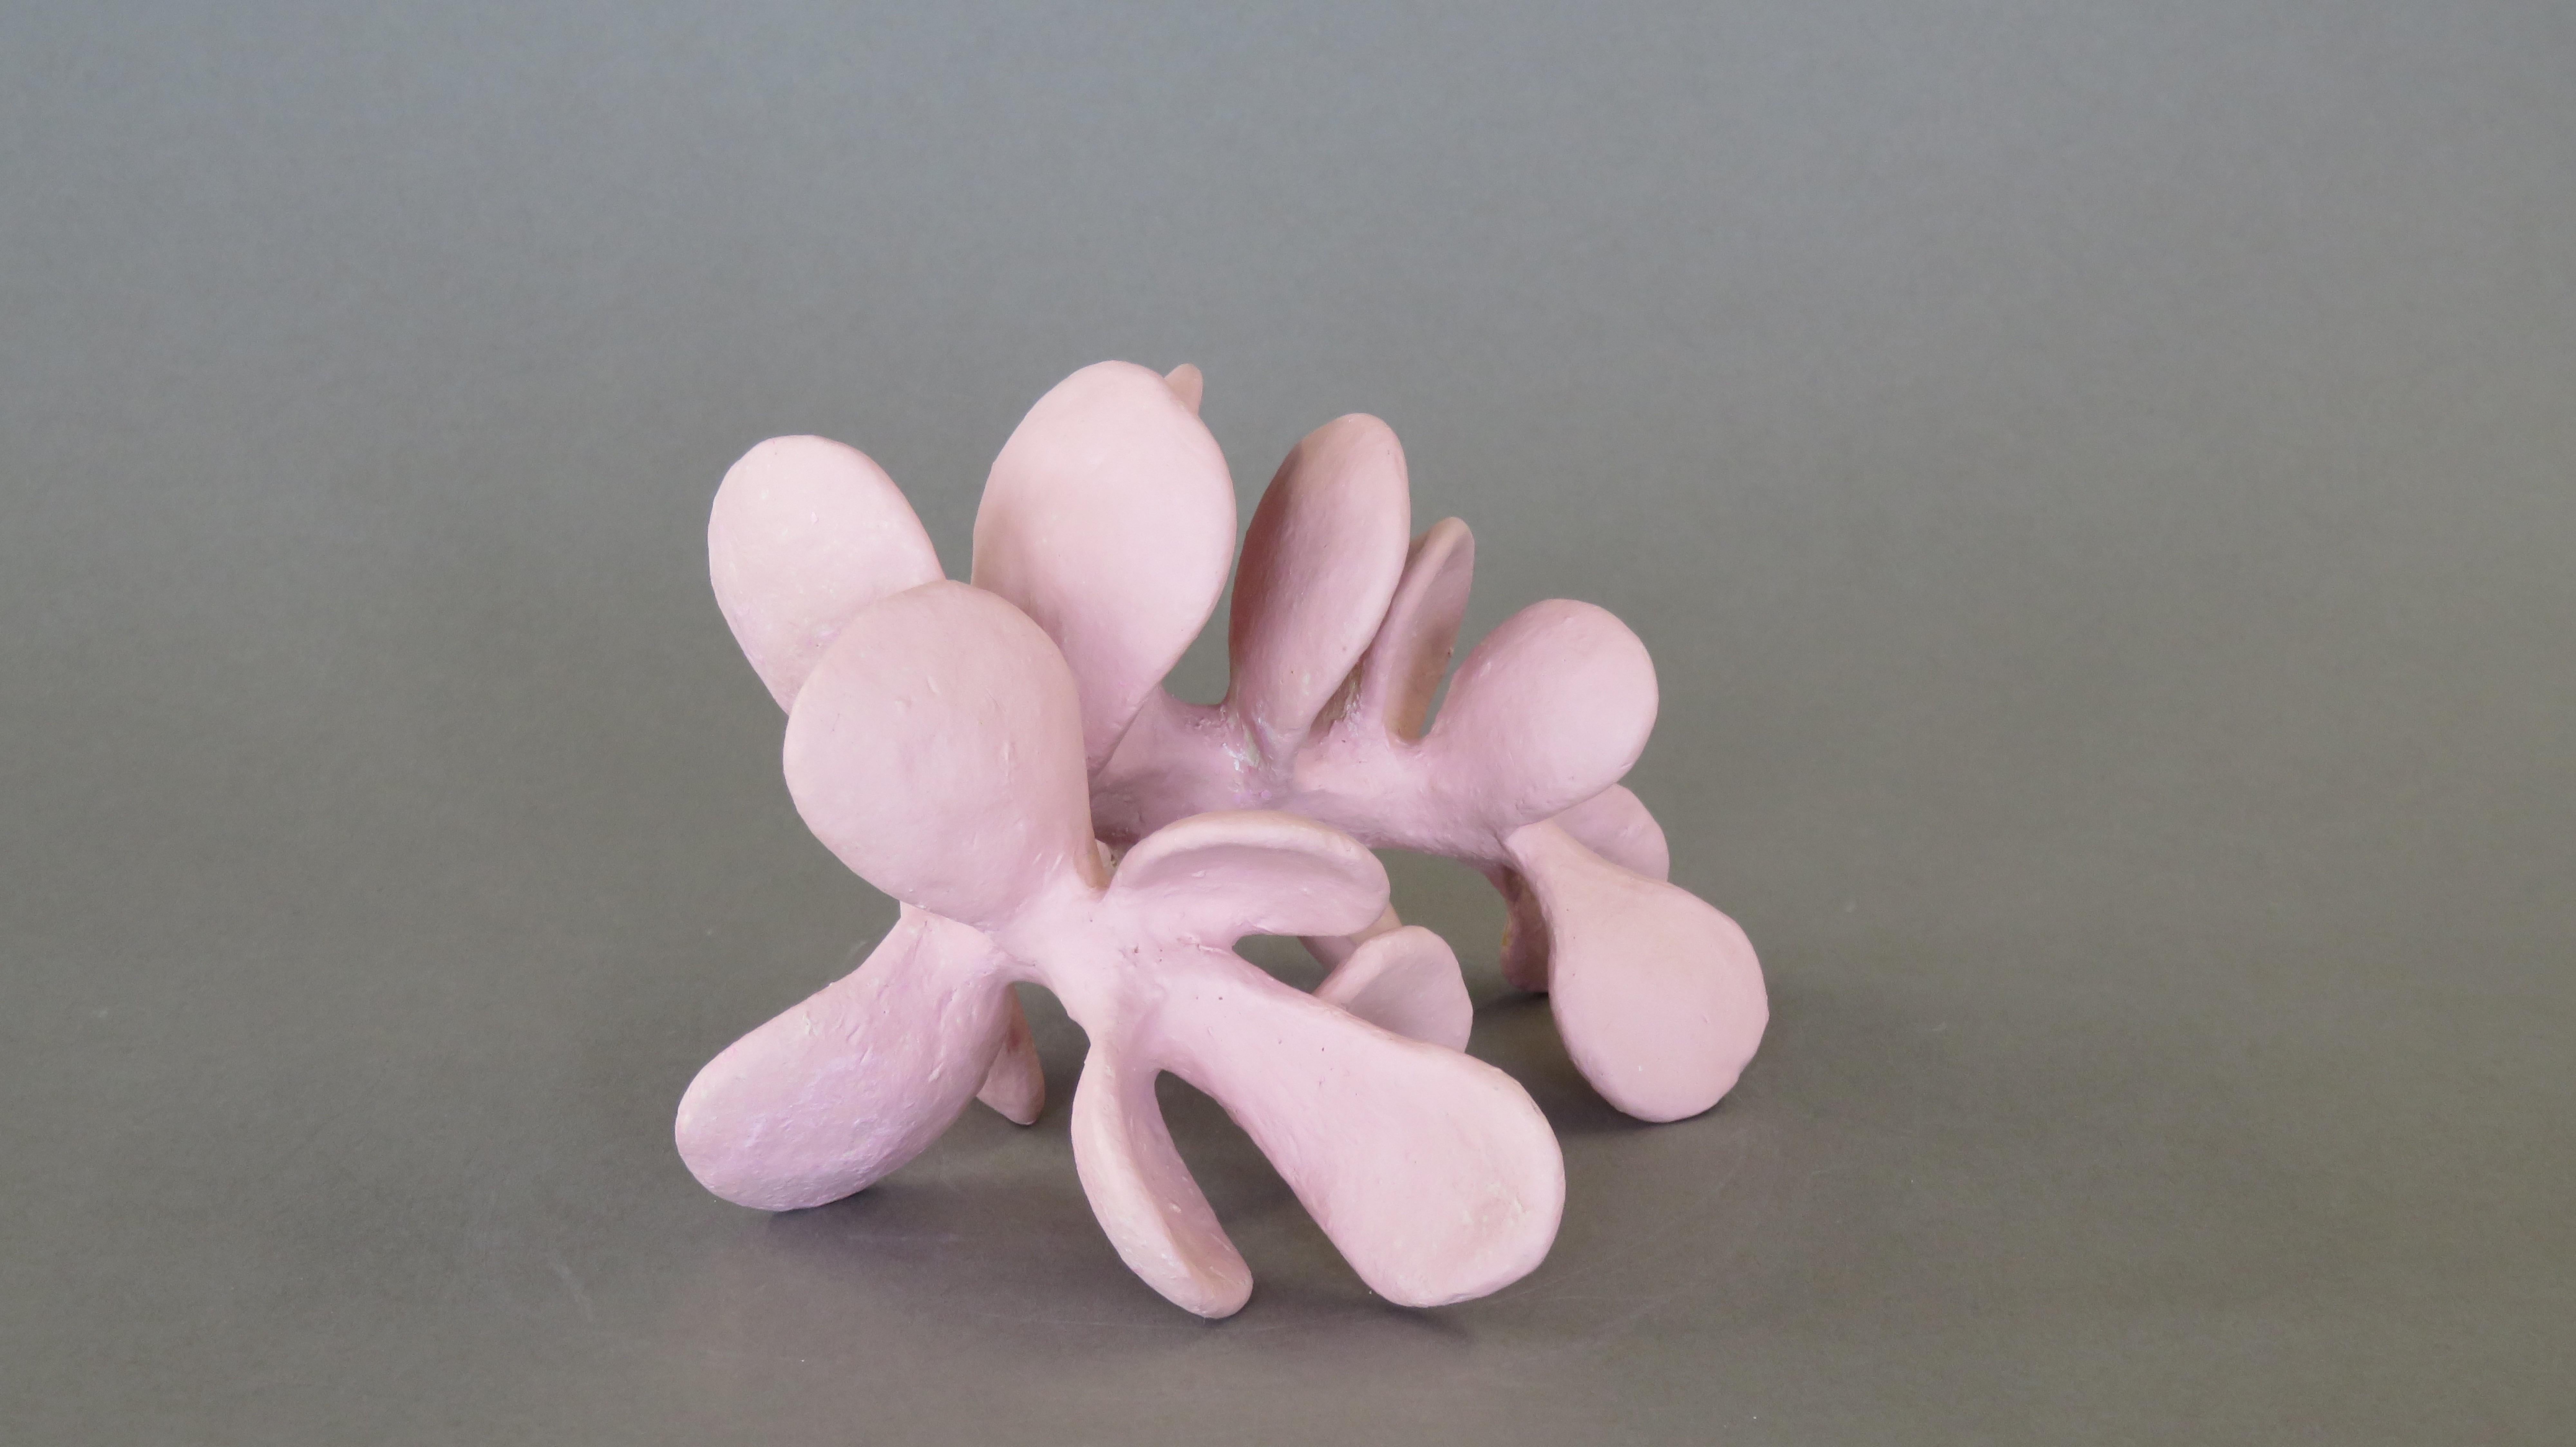 American Handbuilt Ceramic Sculpture in Pink, A Flower-Like Vertebrae With Petals